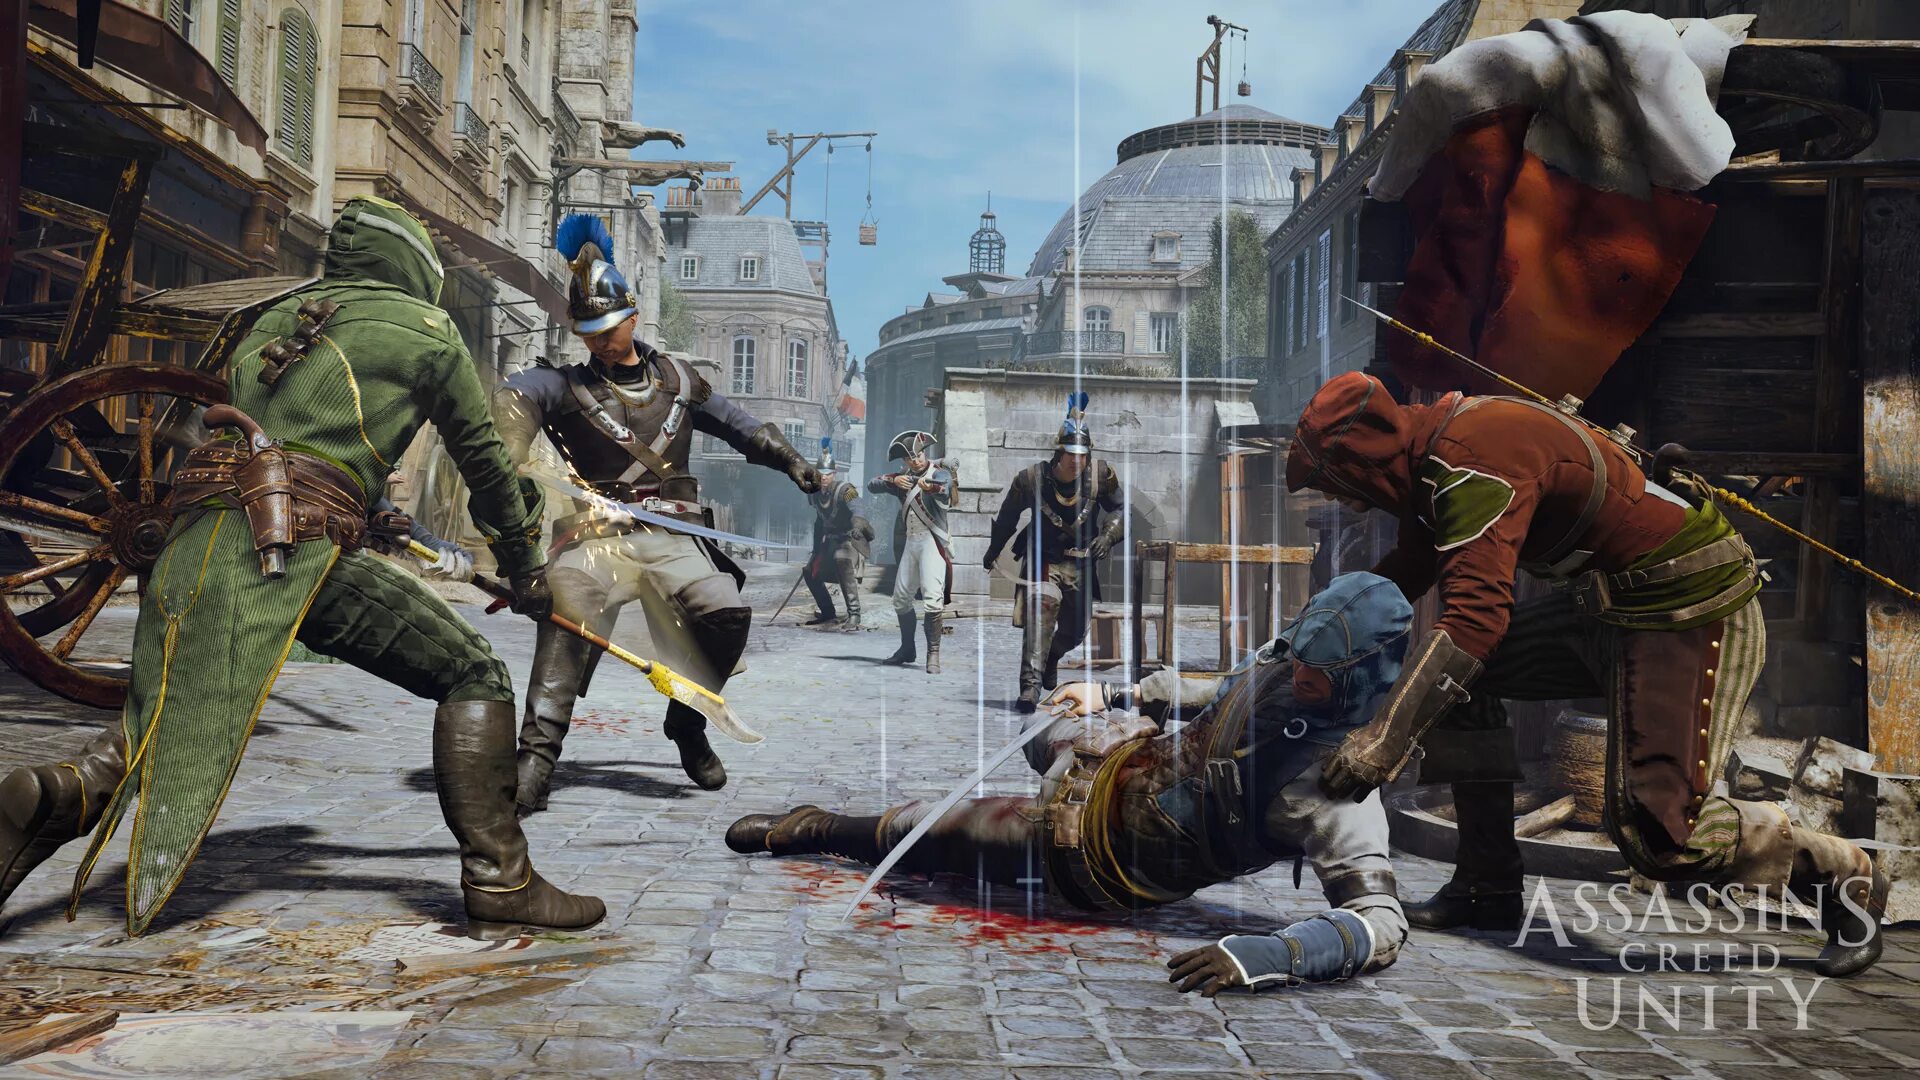 Assassin's Creed Unity геймплей. Assassin's Creed Unity Gameplay. Assassin’s Creed: Unity – 2014. Assassin's Creed 5 Unity. Ассасин юнит